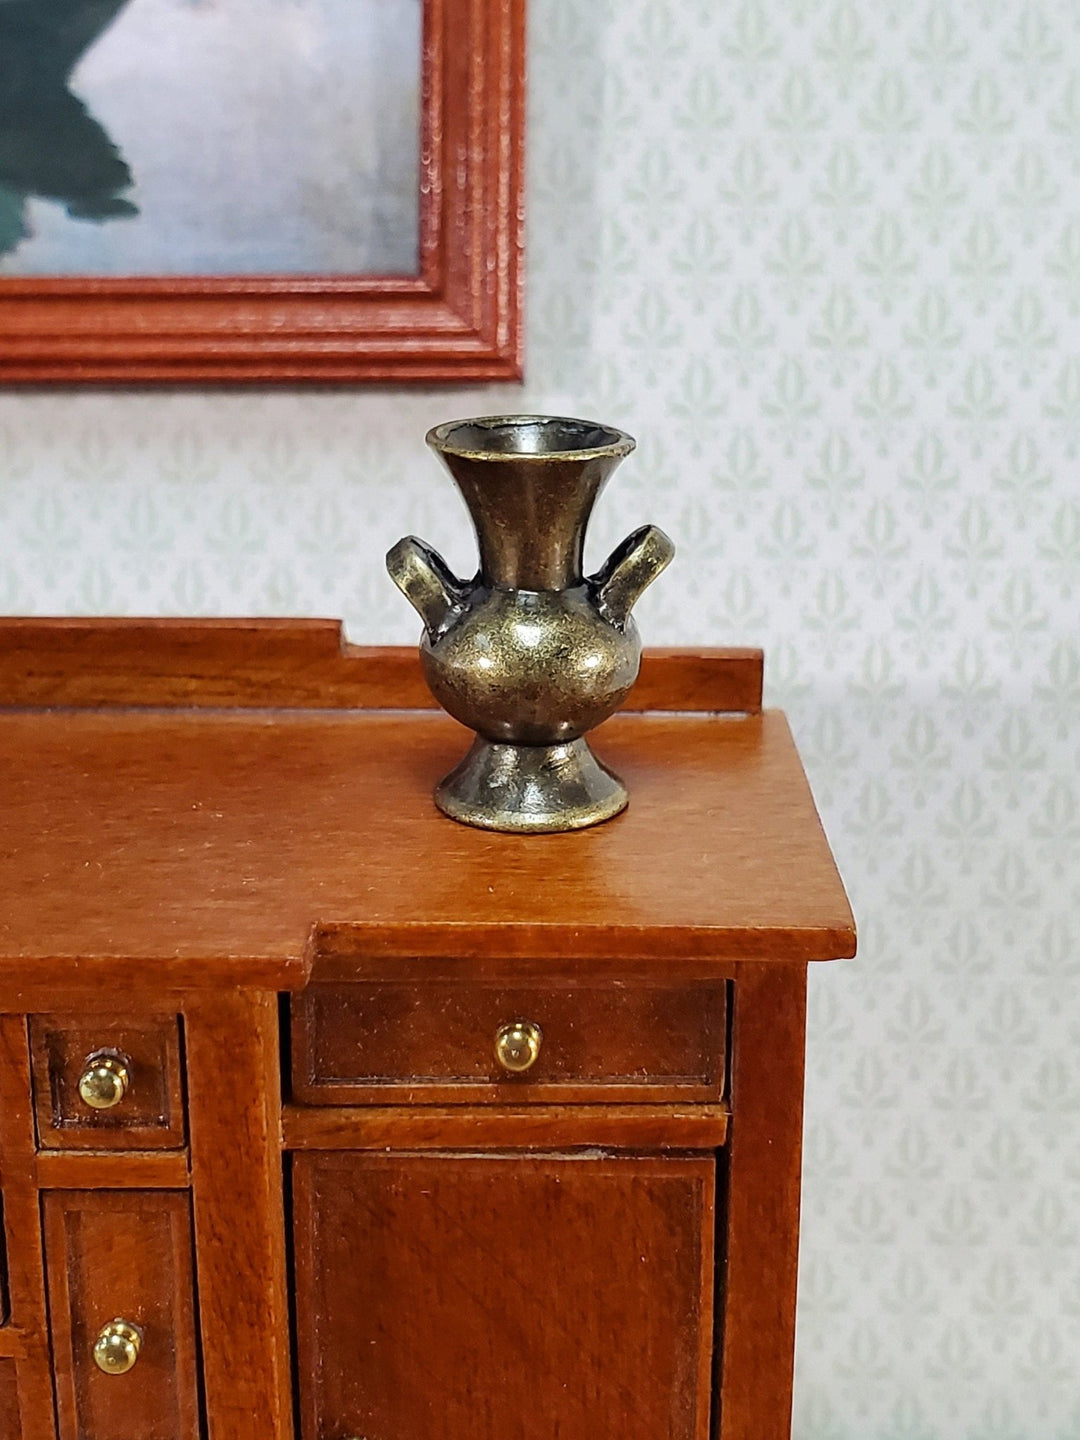 Dollhouse Vase Urn Bronze Metal for Flowers or Decoration 1:12 Scale Miniature - Miniature Crush